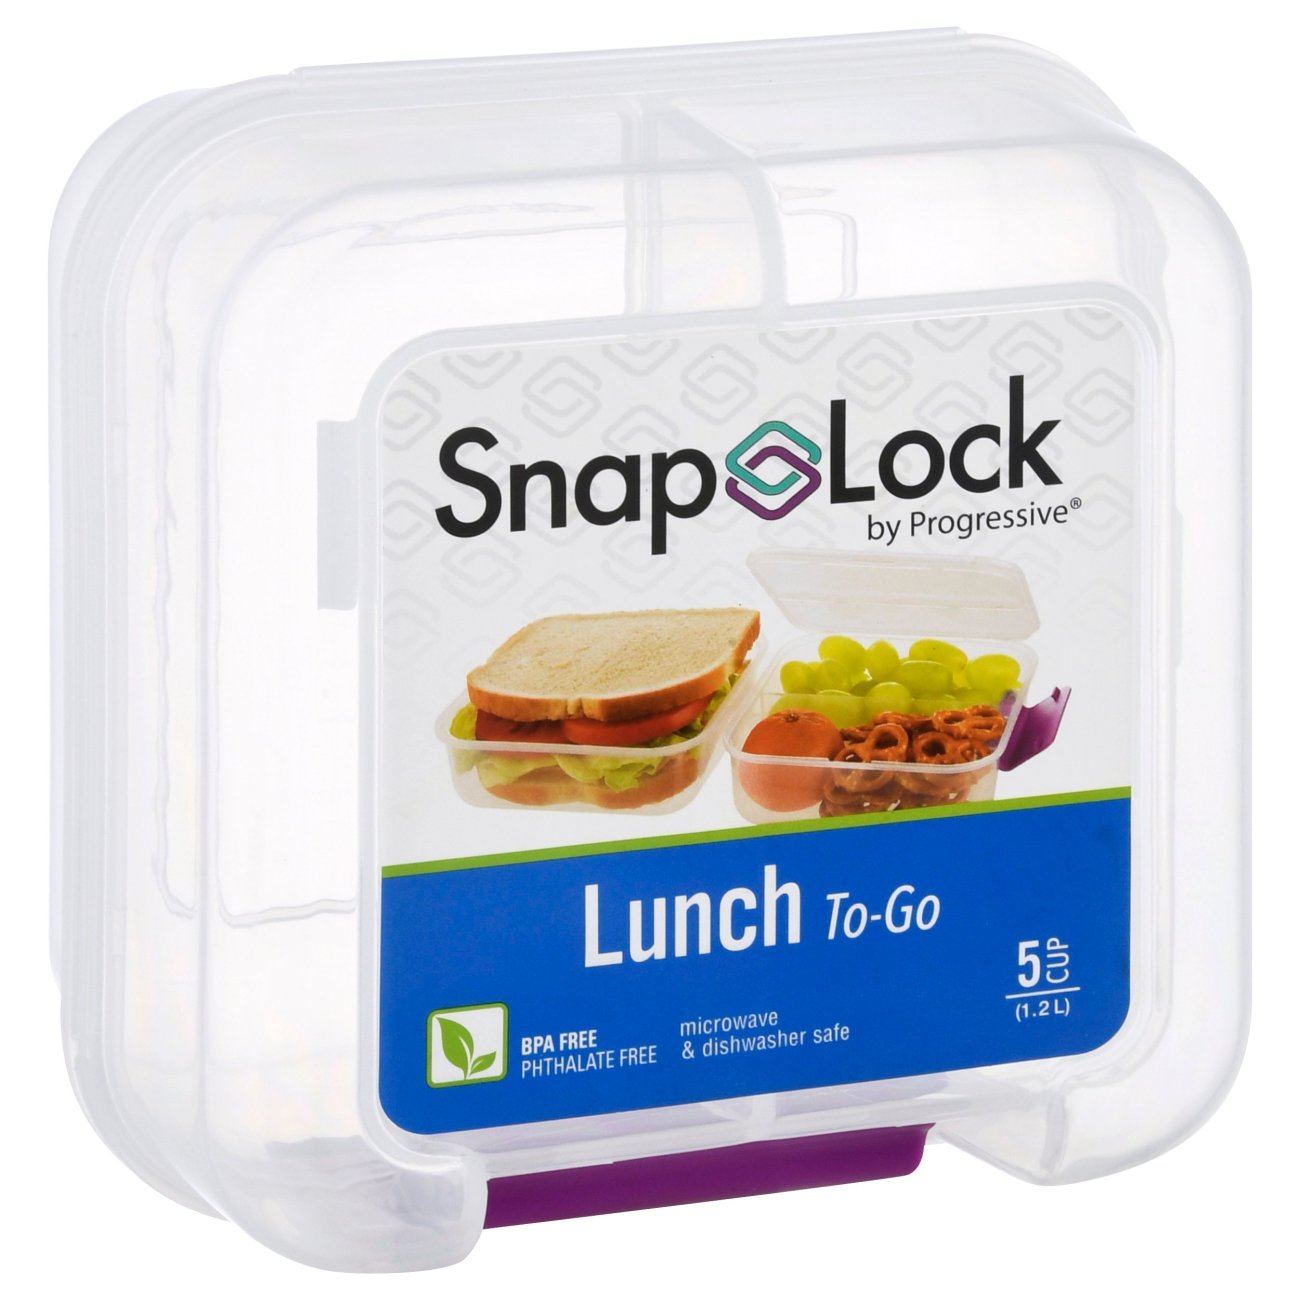 Sandwich To Go 2 cup Blue Microwavable Portable Sandwich Container - 3 Pk  by Progressive SnapLock at Fleet Farm